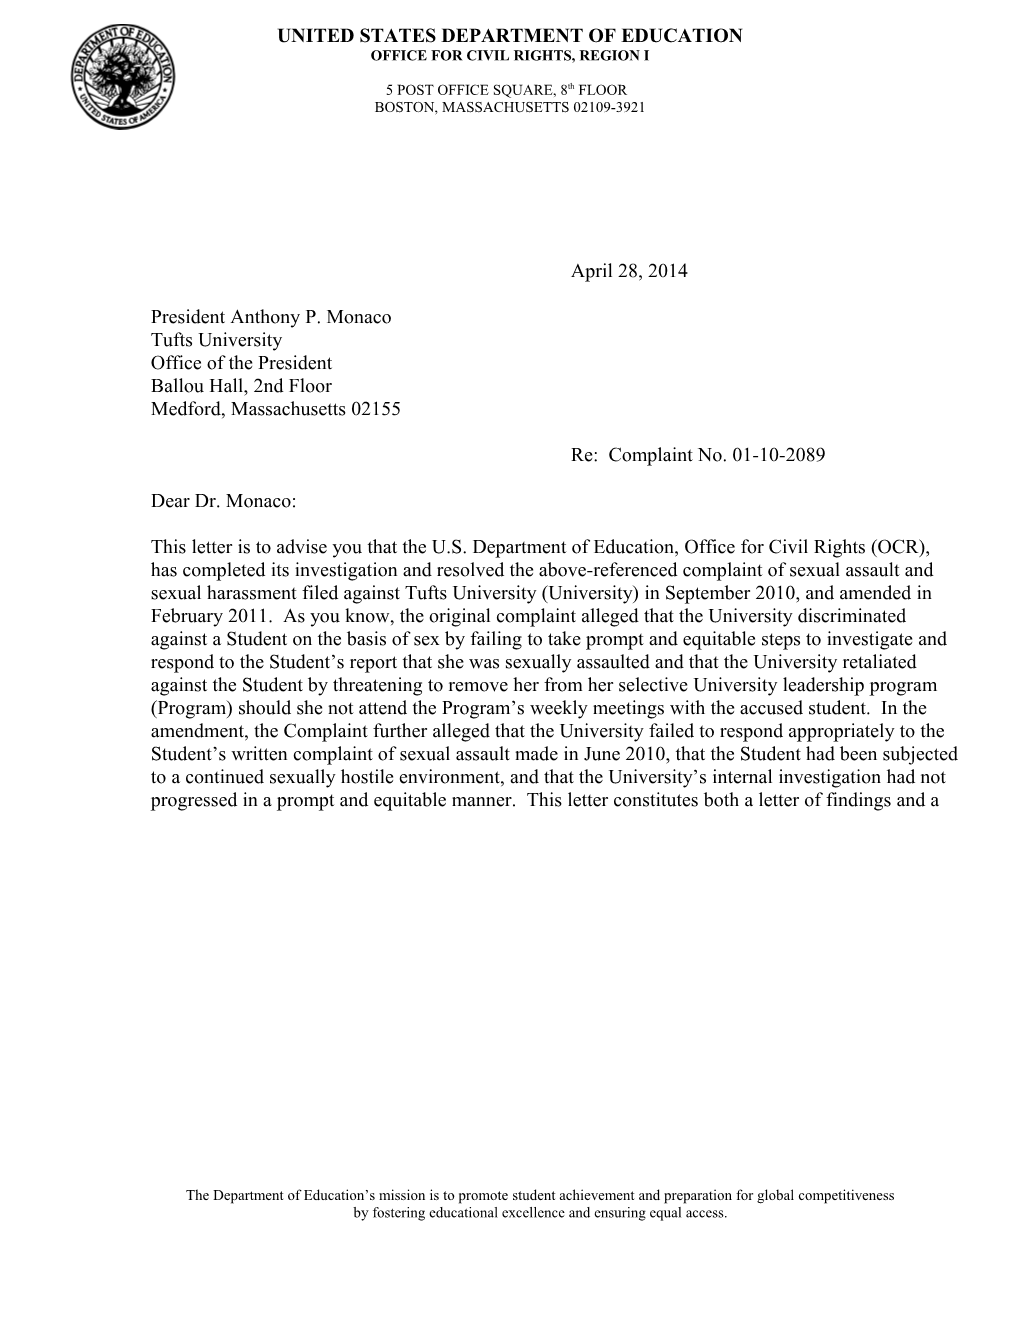 Resolution Letter: Tufts University, Massachusetts: Compliance Review #01-10-2089 April